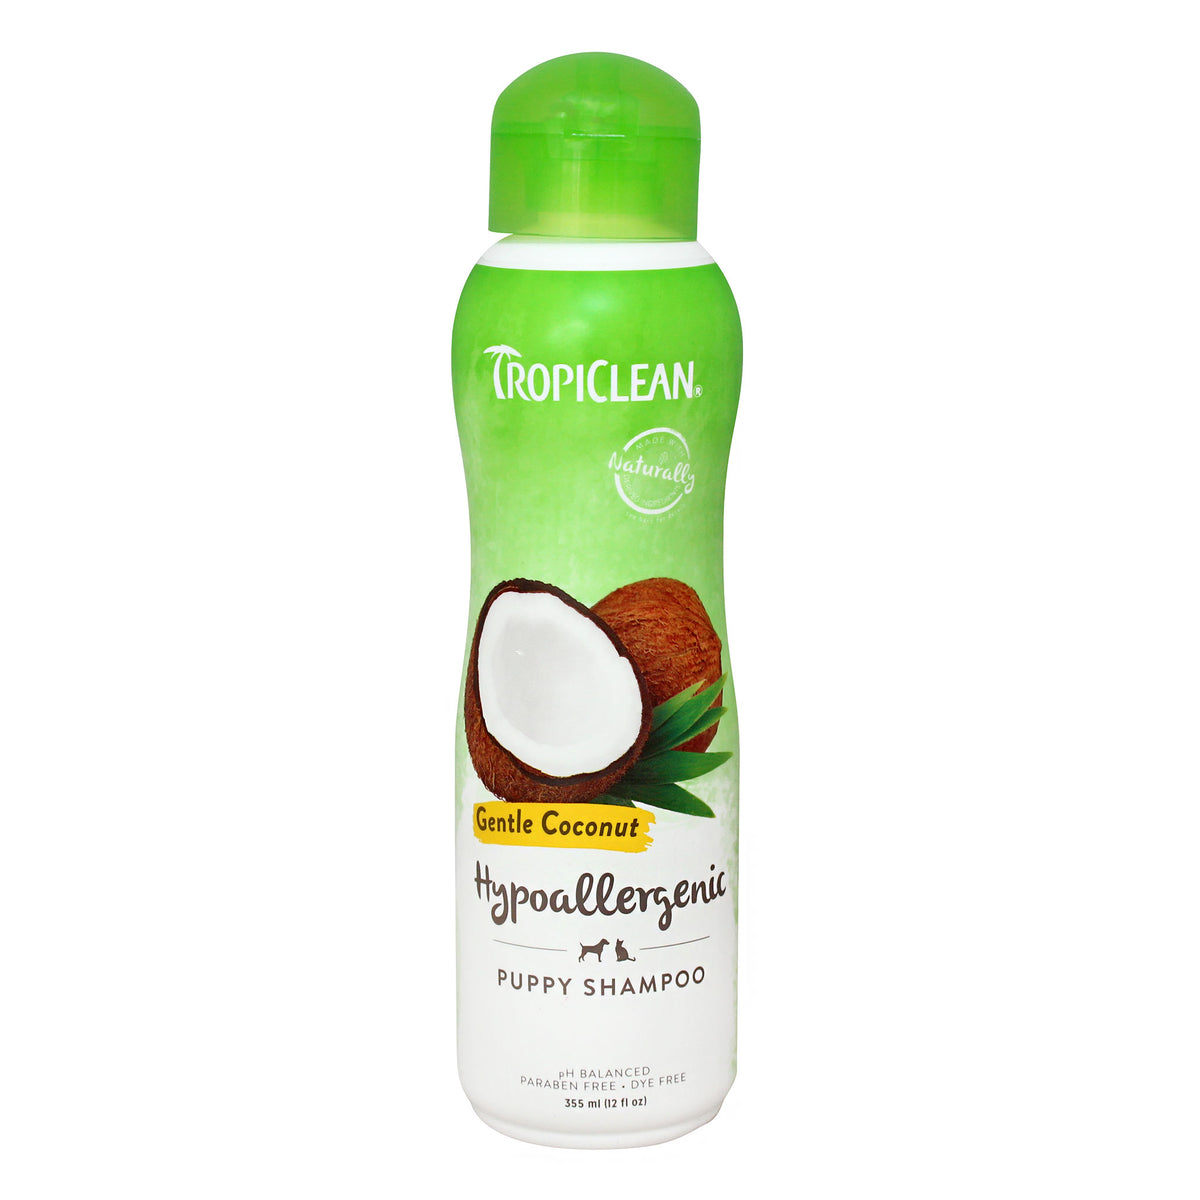 TropiClean Gentle Coconut Hypoallergenic Puppy Shampoo 355mL